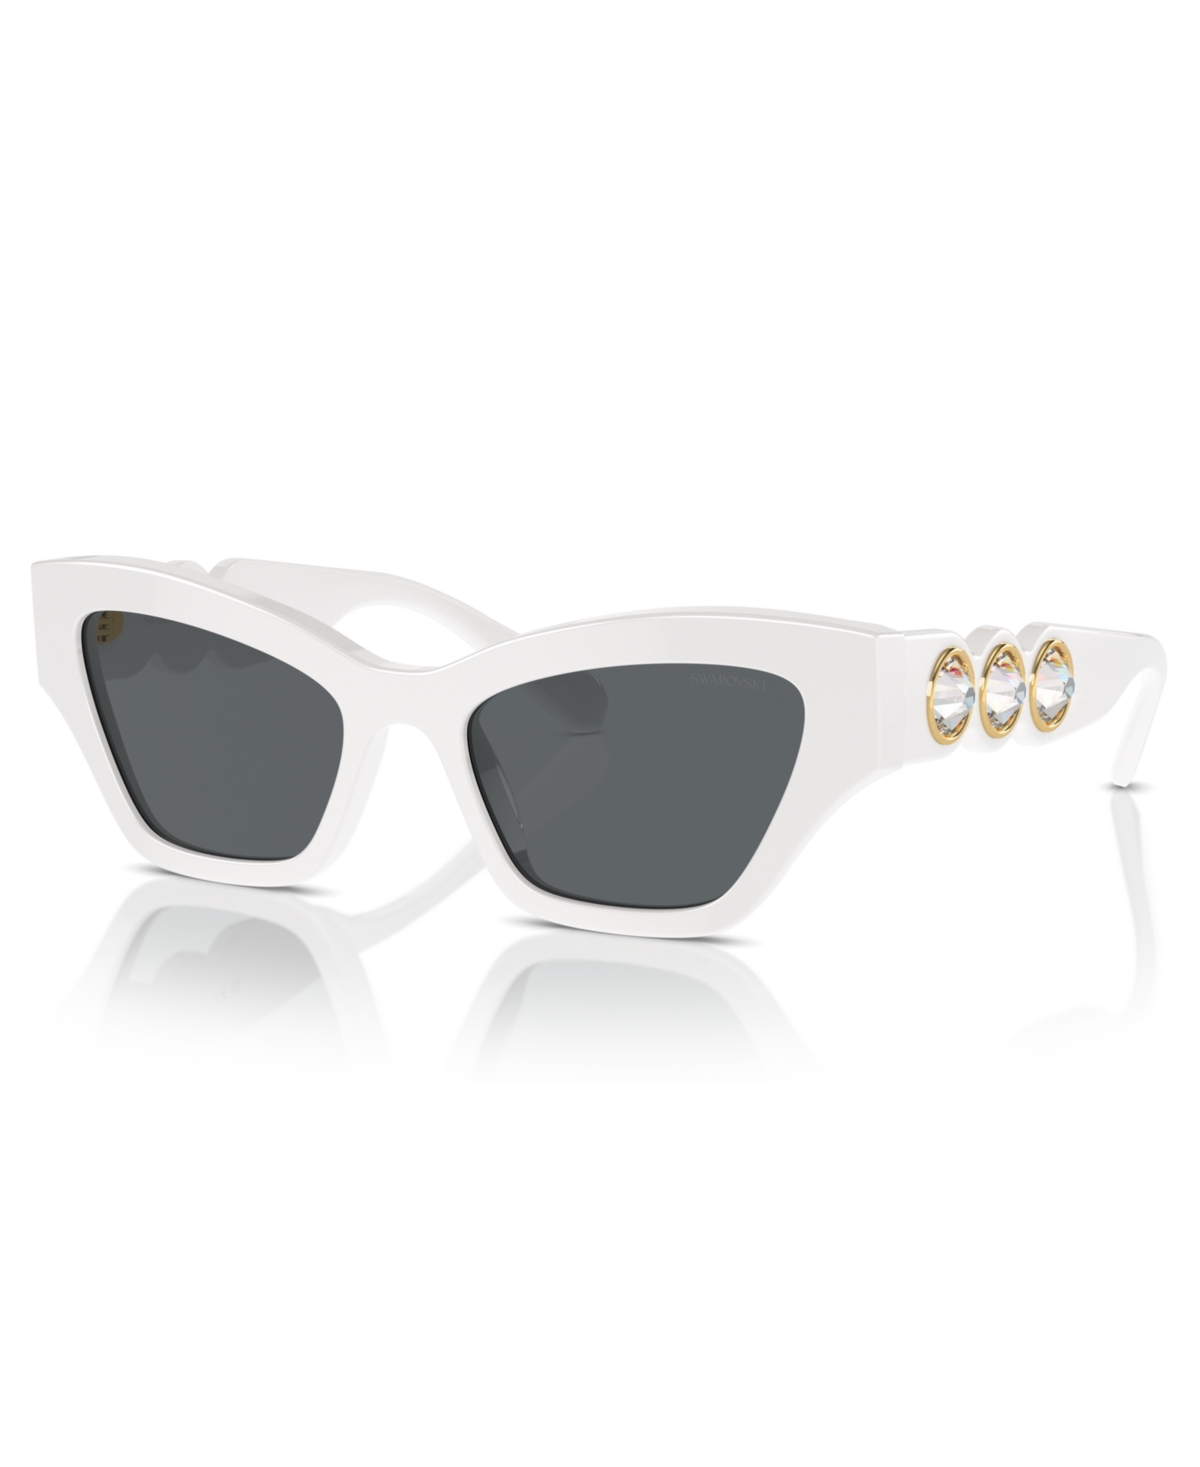 Women's Sunglasses, Sk6021 - White